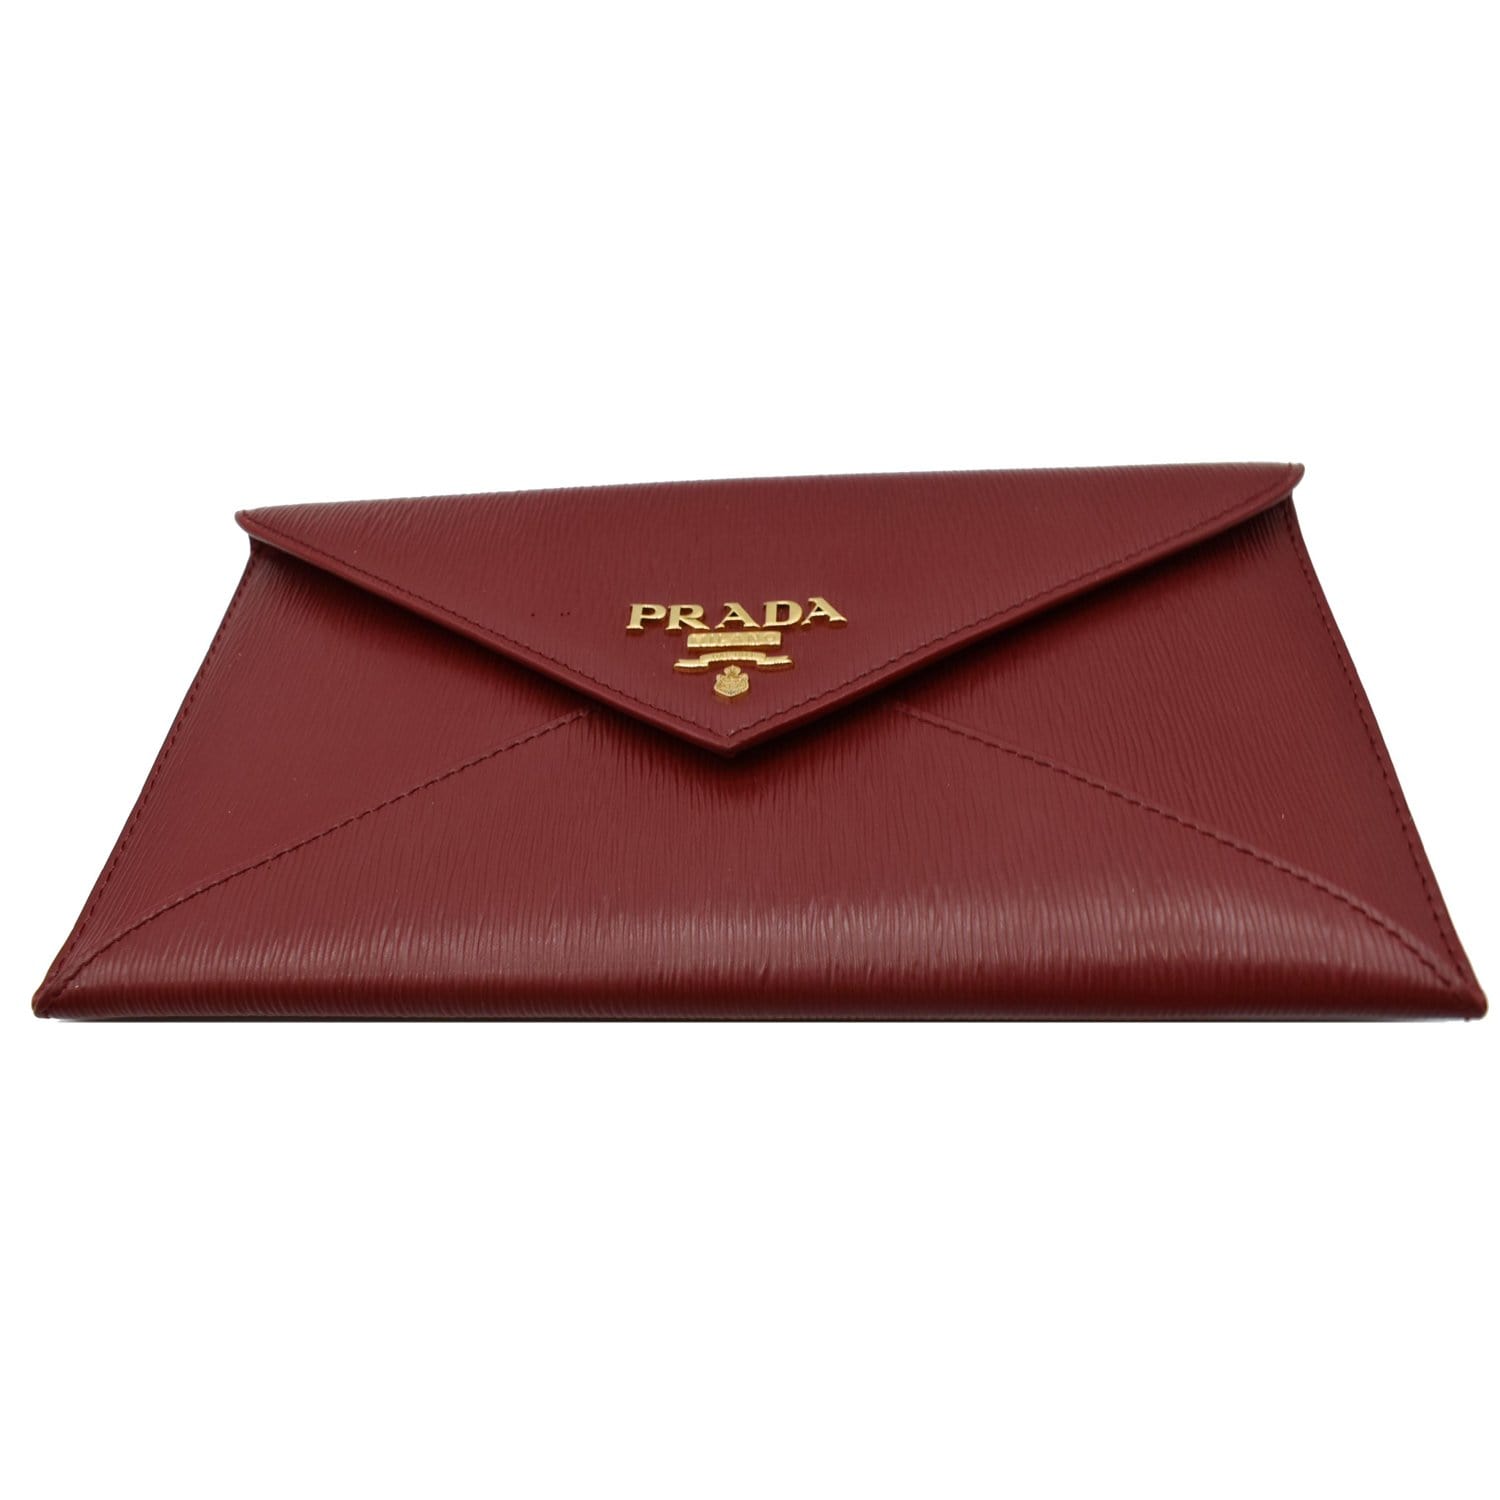 PRADA envelope shoulder bag